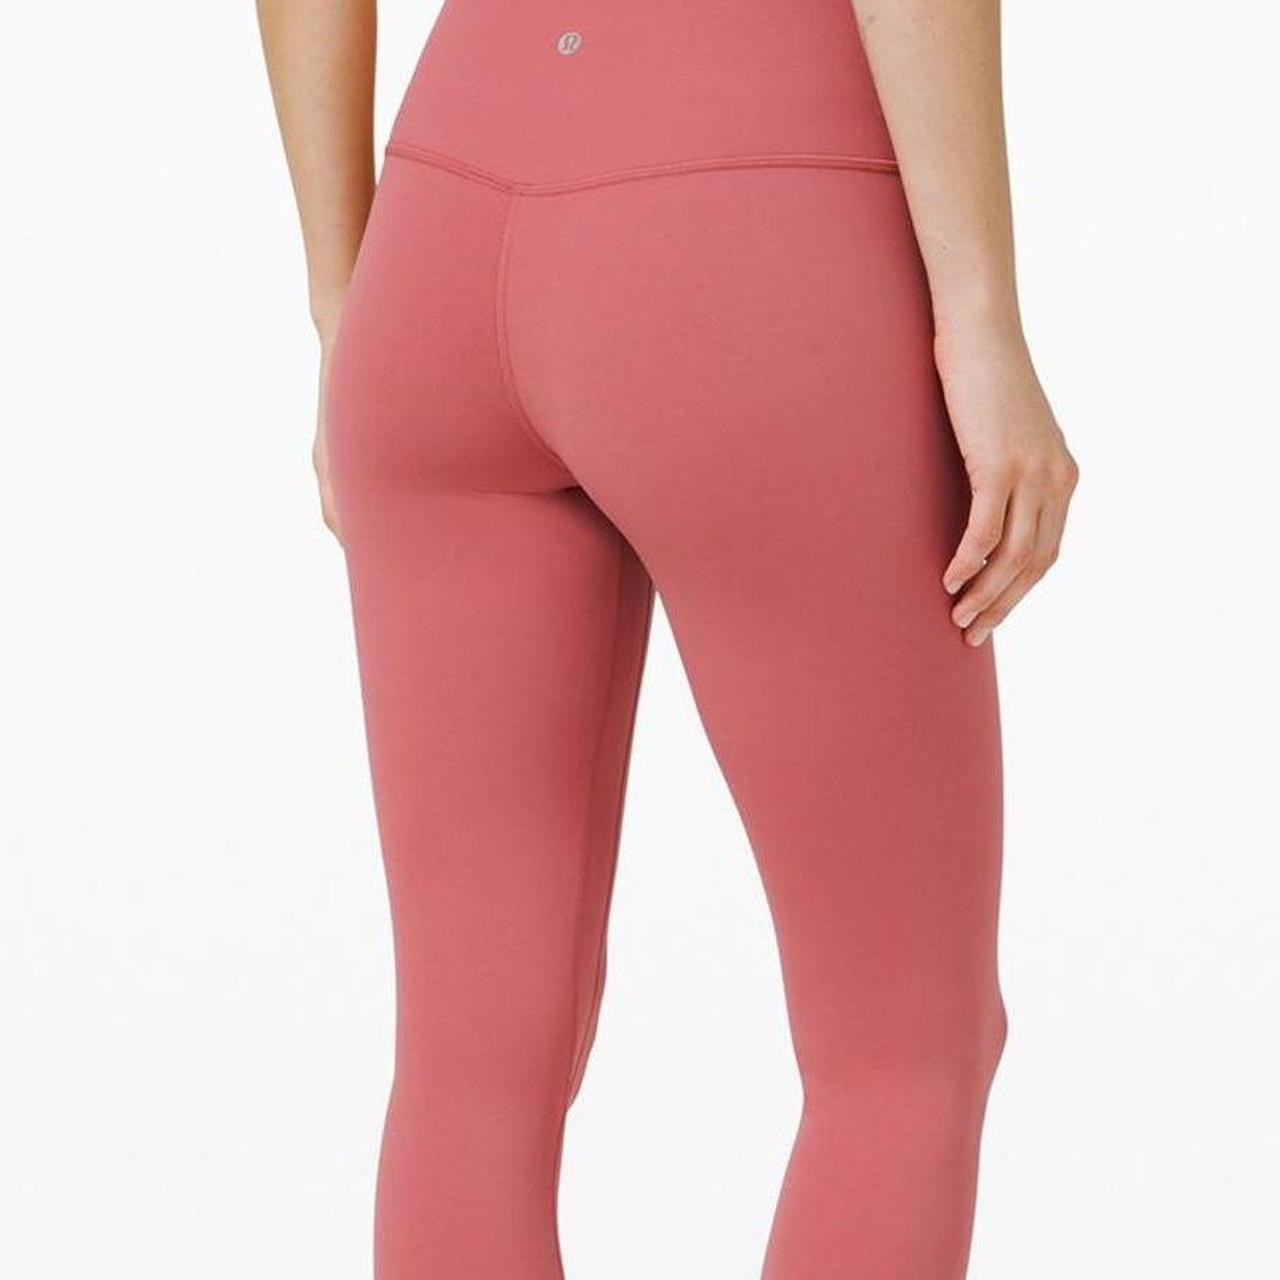 Lululemon Align pant cropped leggings Salmon pink - Depop